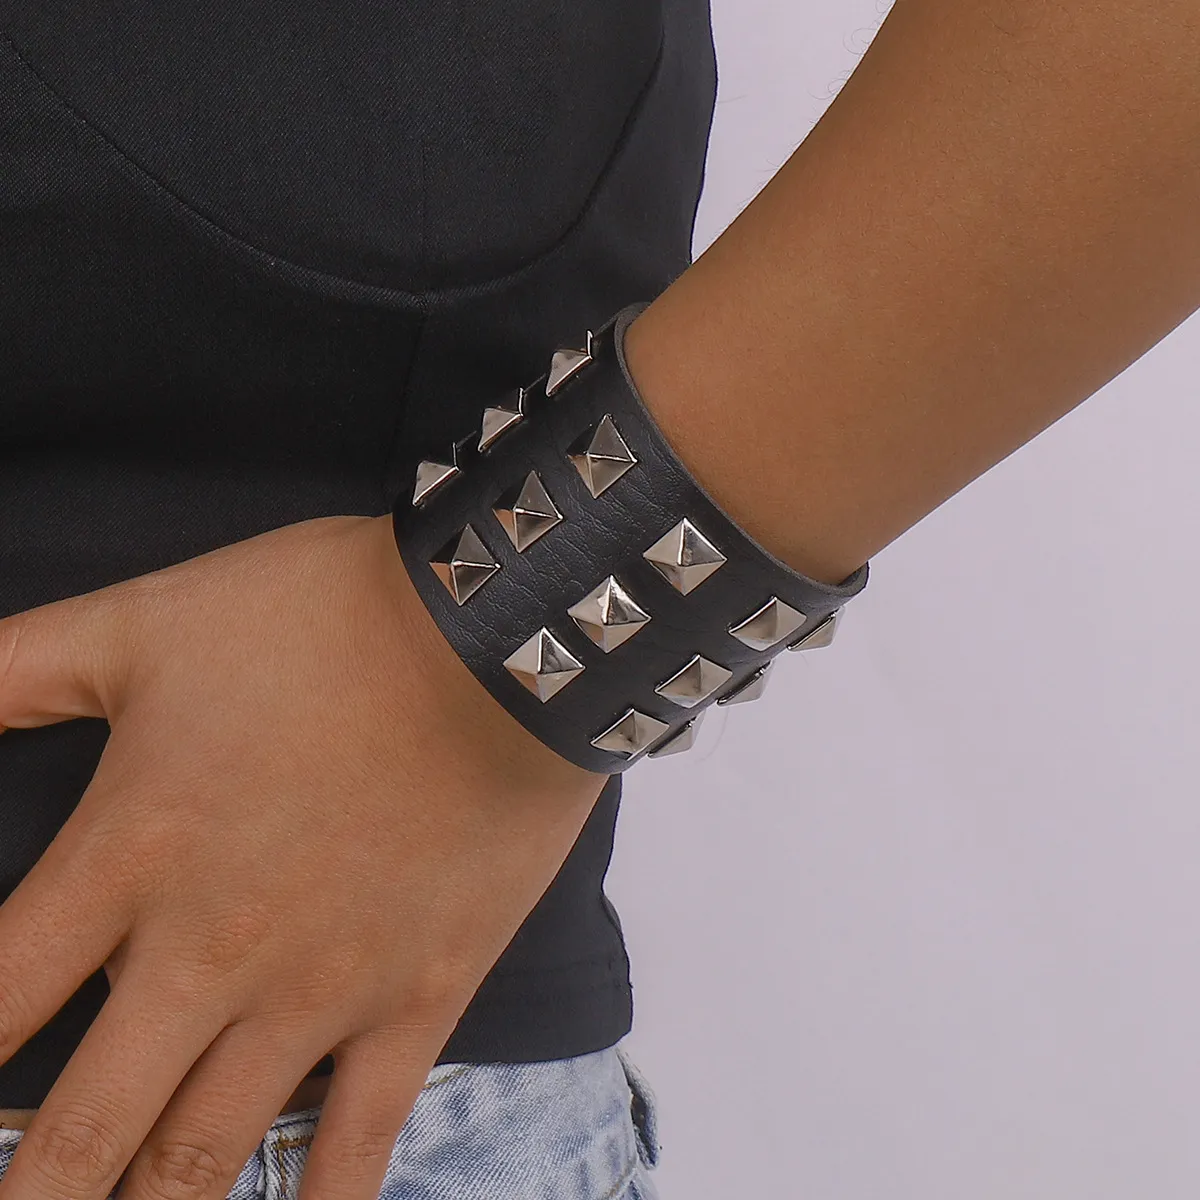 NEW Punk Leather Rivet Bracelet Bangle Hiphop Rock Black Wide PU Bracelets Wristband For Women Men Jewelry